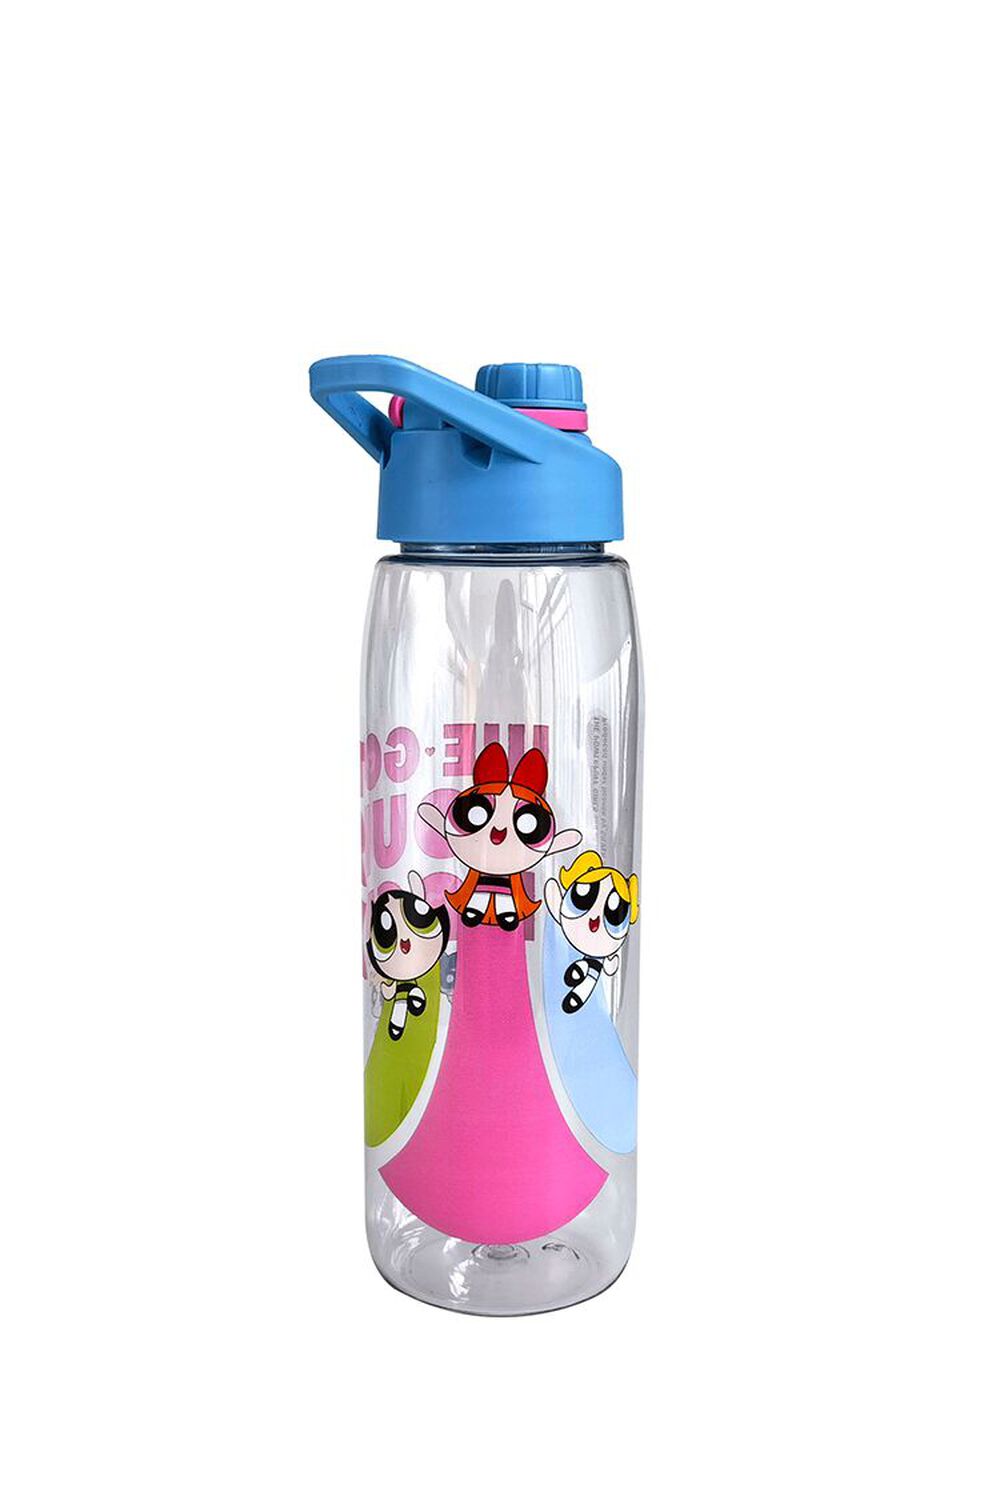 The Powerpuff Girls Water Bottle